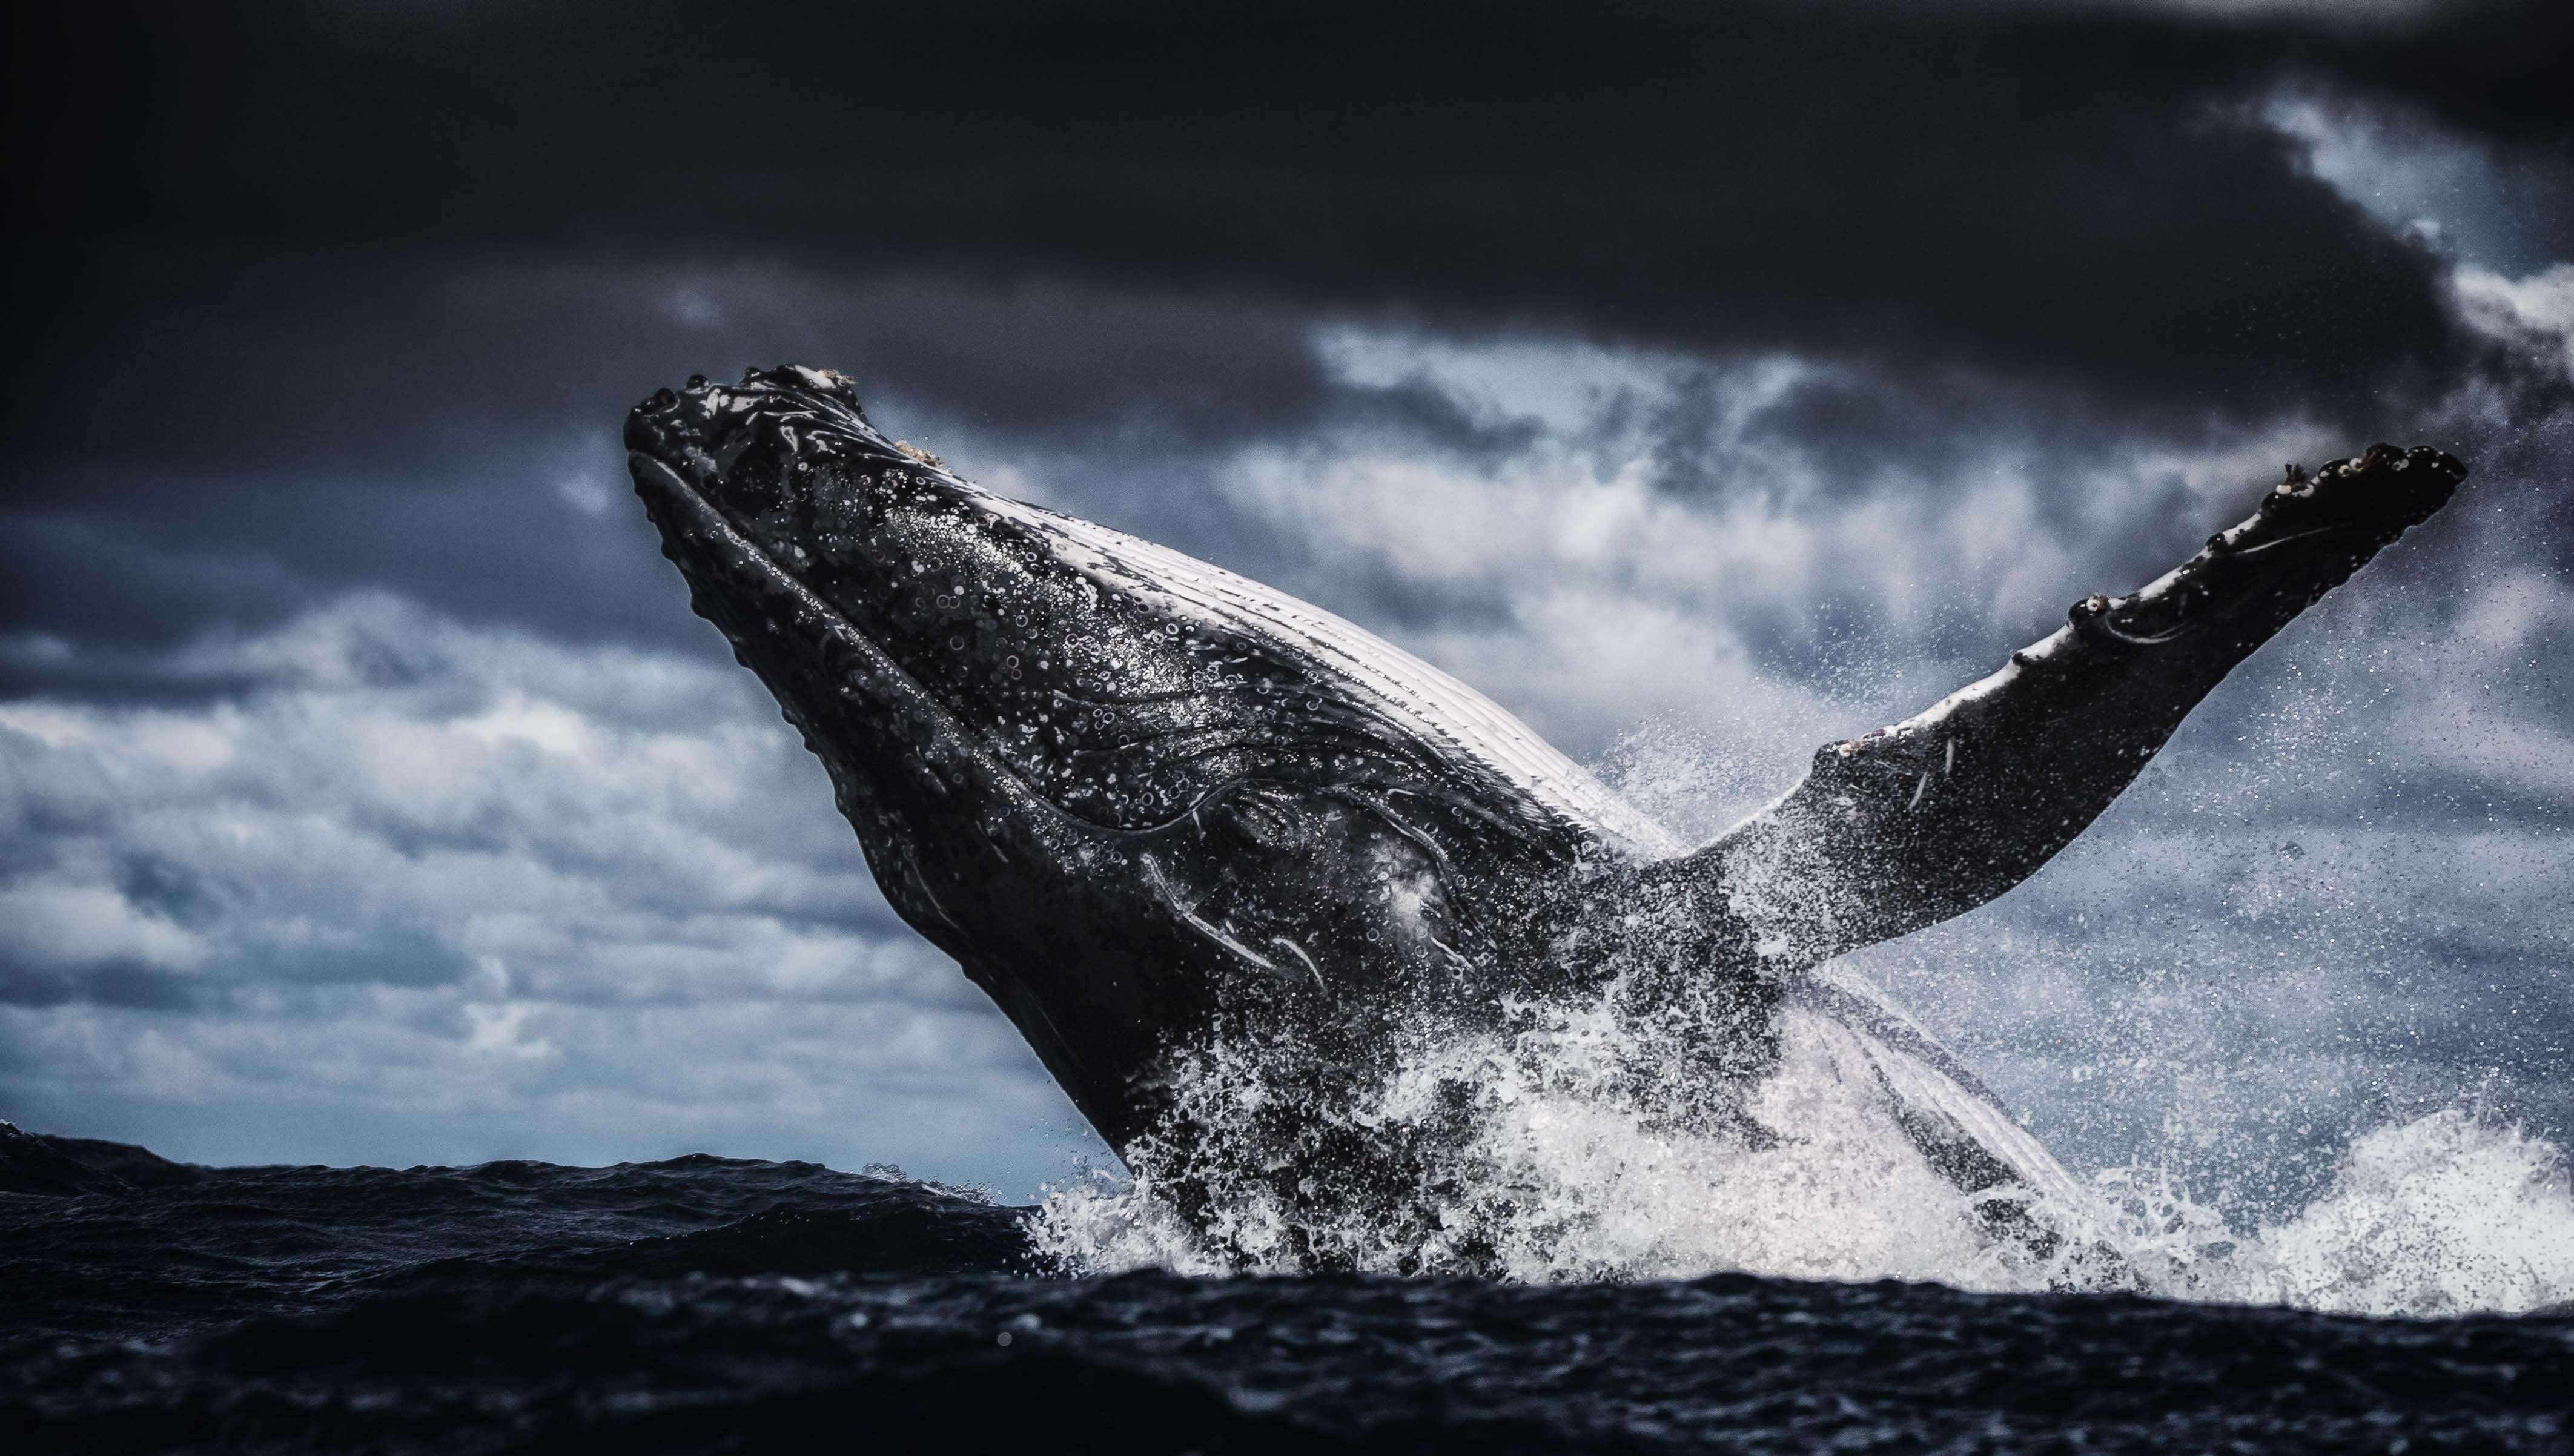 Humpback Whale 4k Ultra HD Wallpaper. Background Image